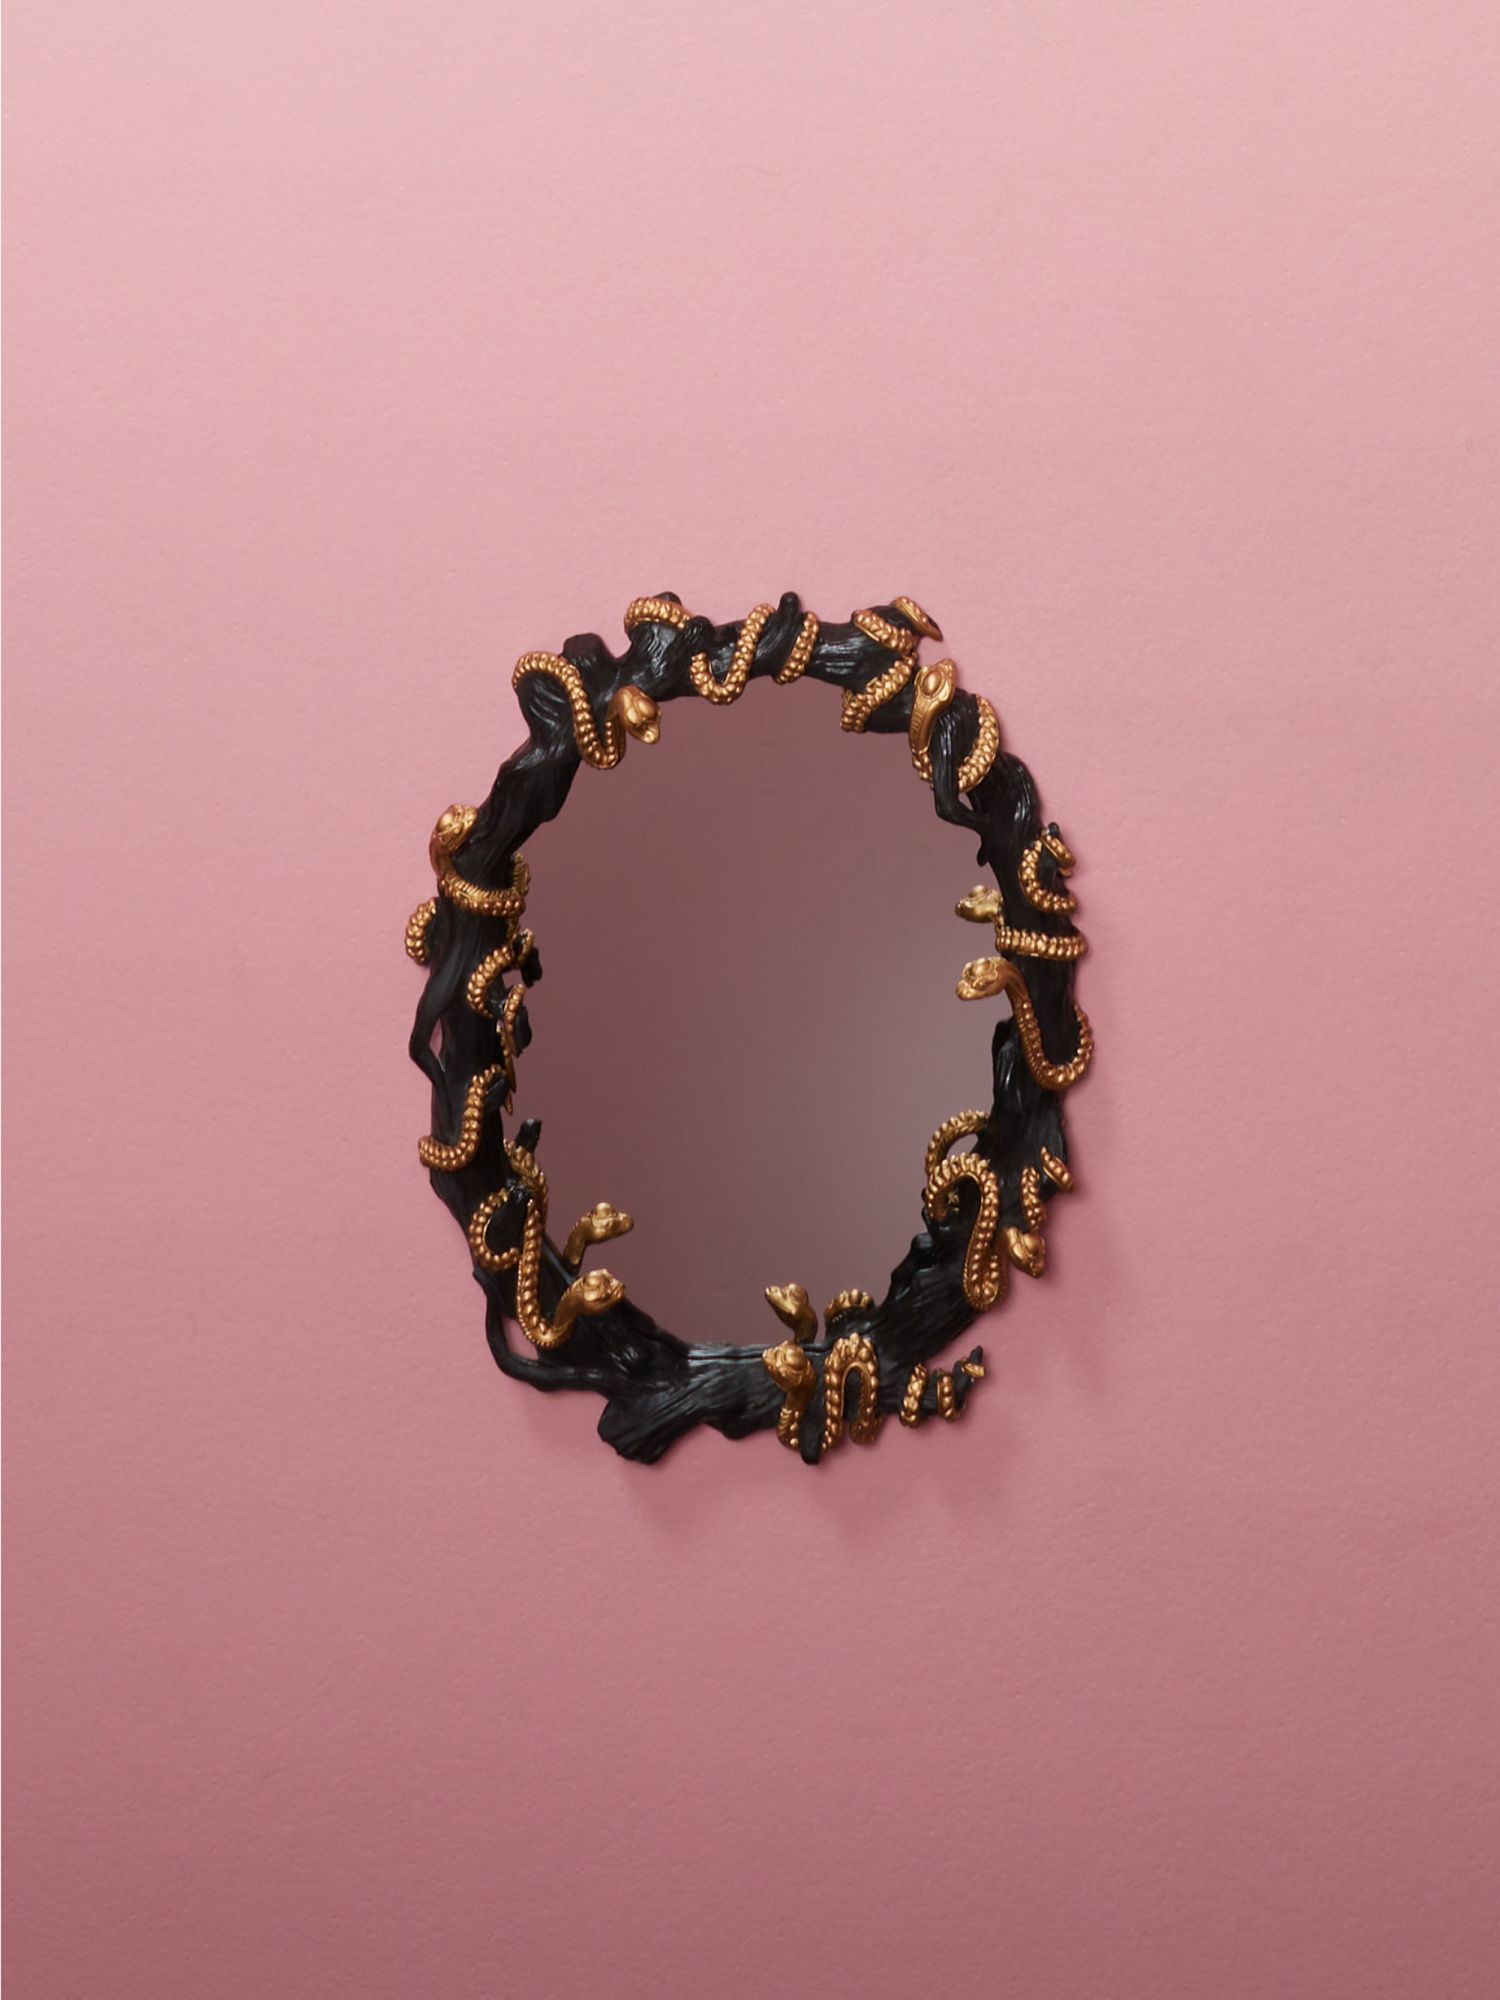 16x25 Hanging Snake Wall Mirror | Seasonal Decor | HomeGoods | HomeGoods